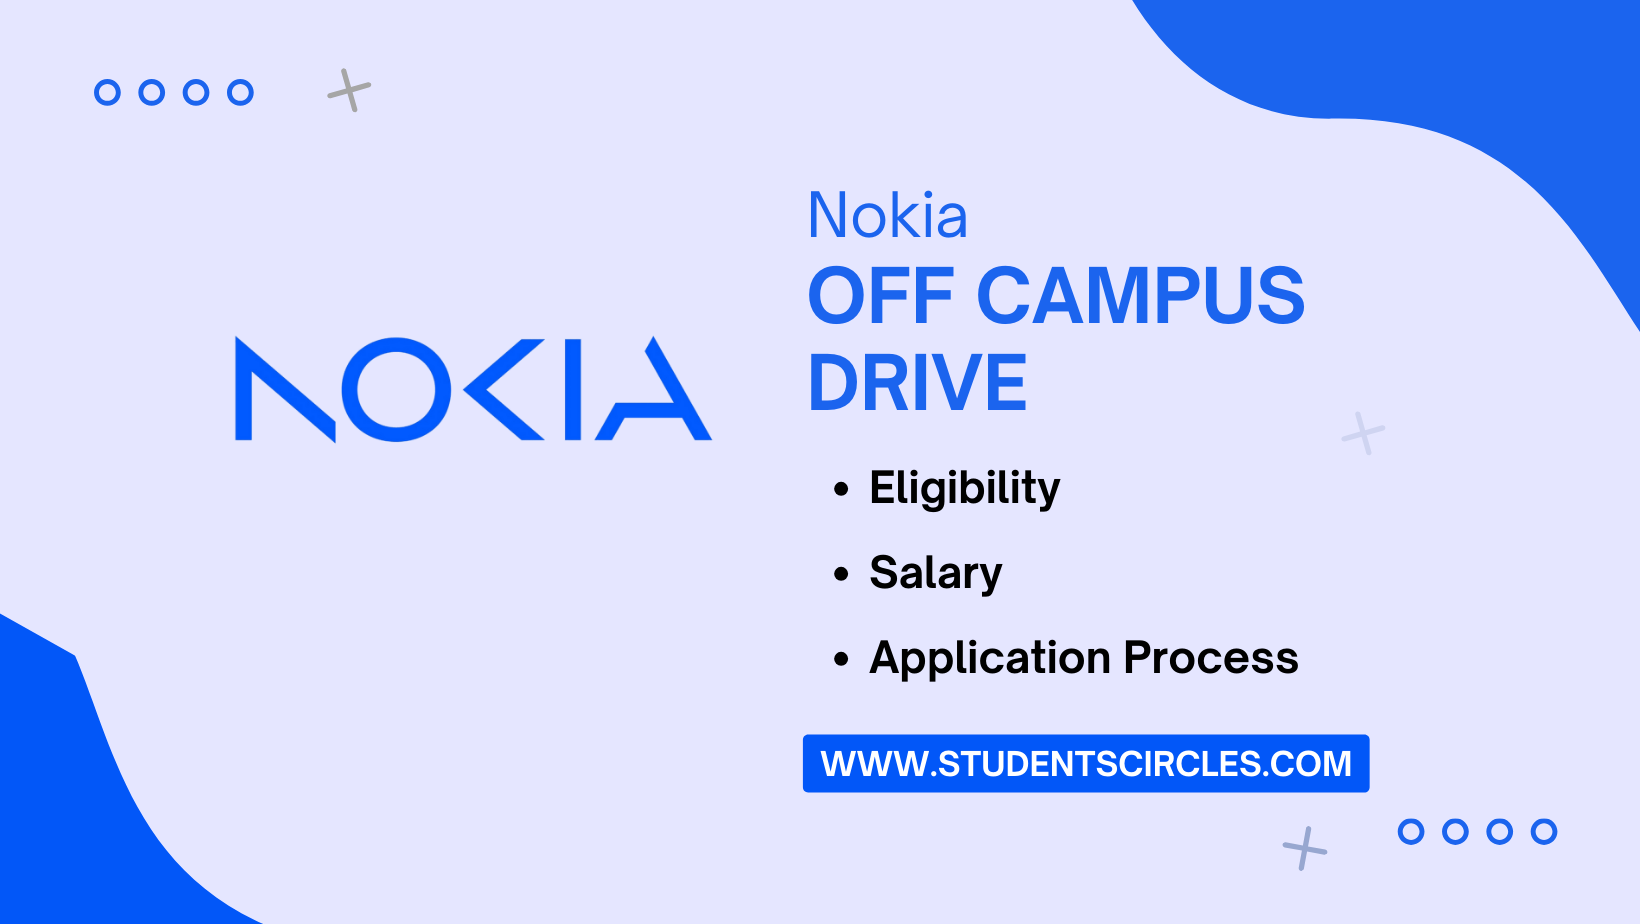 Nokia Off Campus Drive